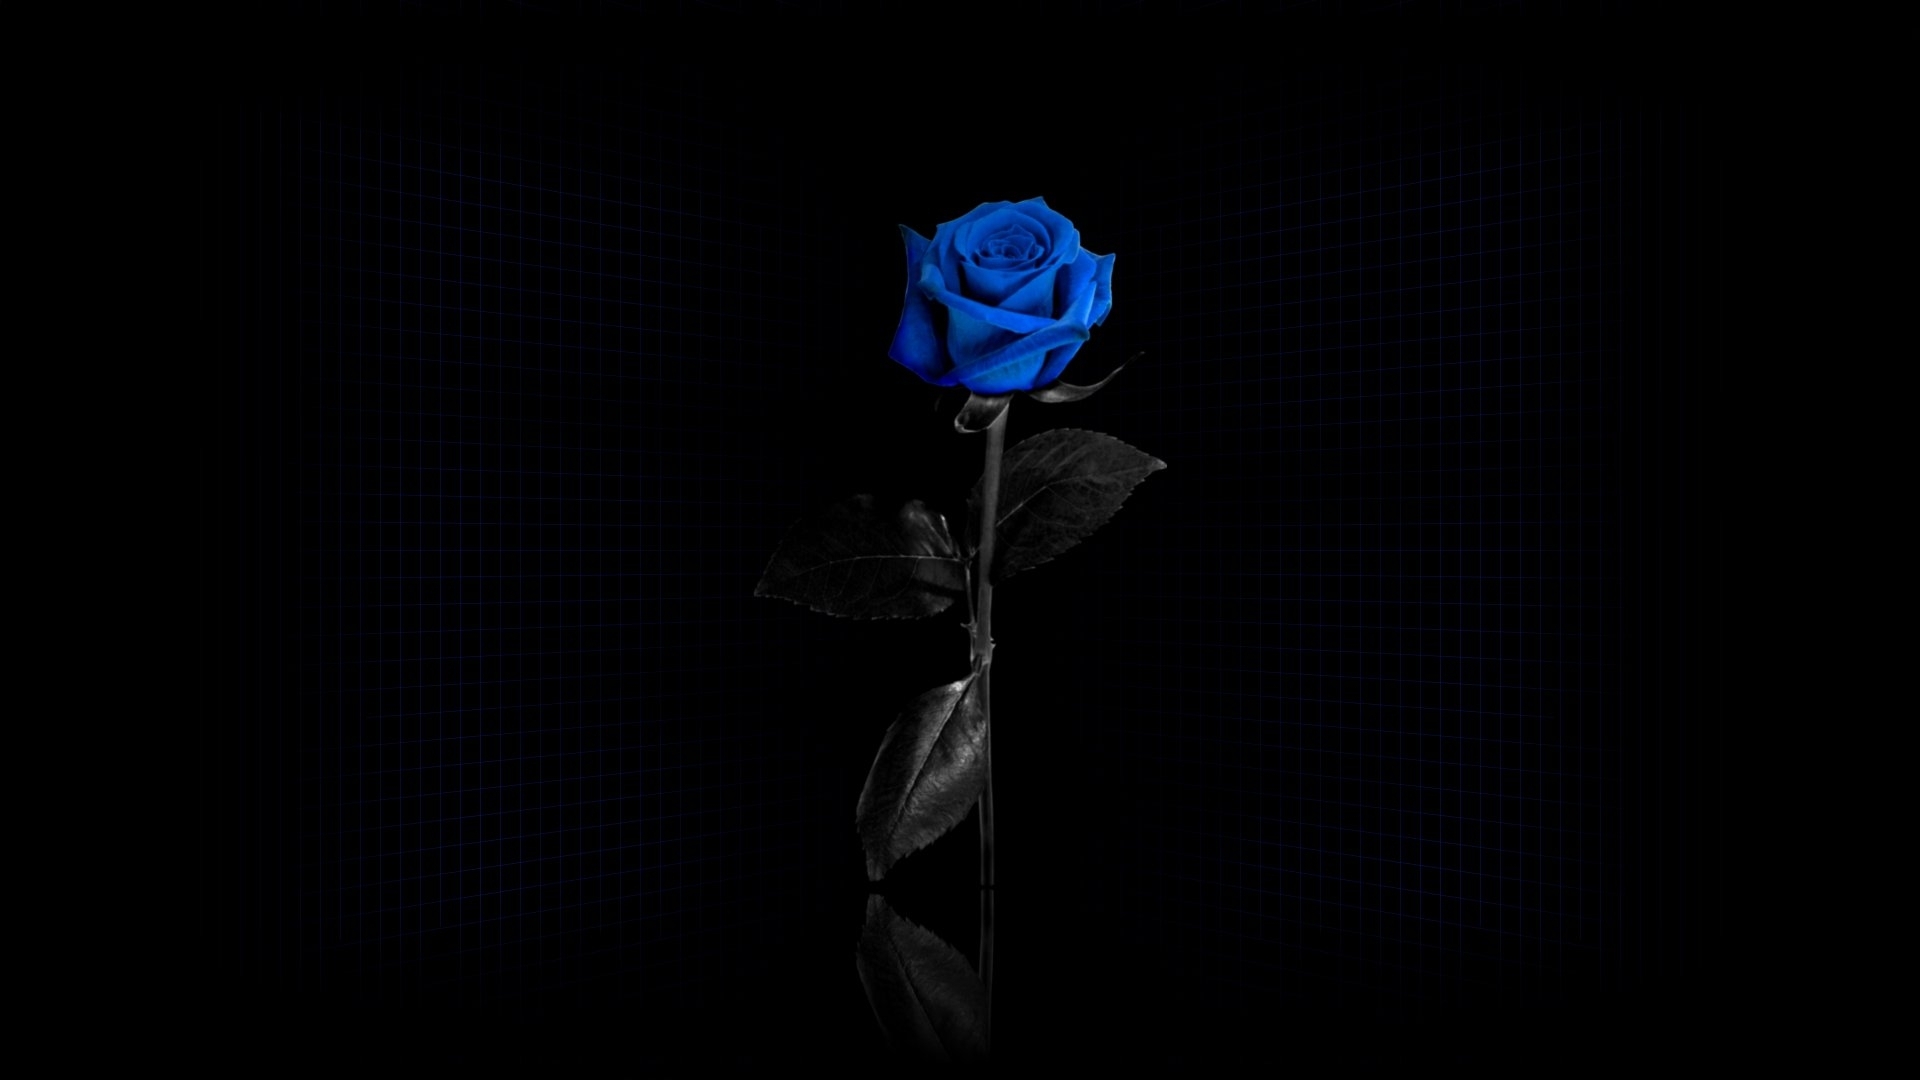 Blue Rose On Black Background Wallpaper And Image